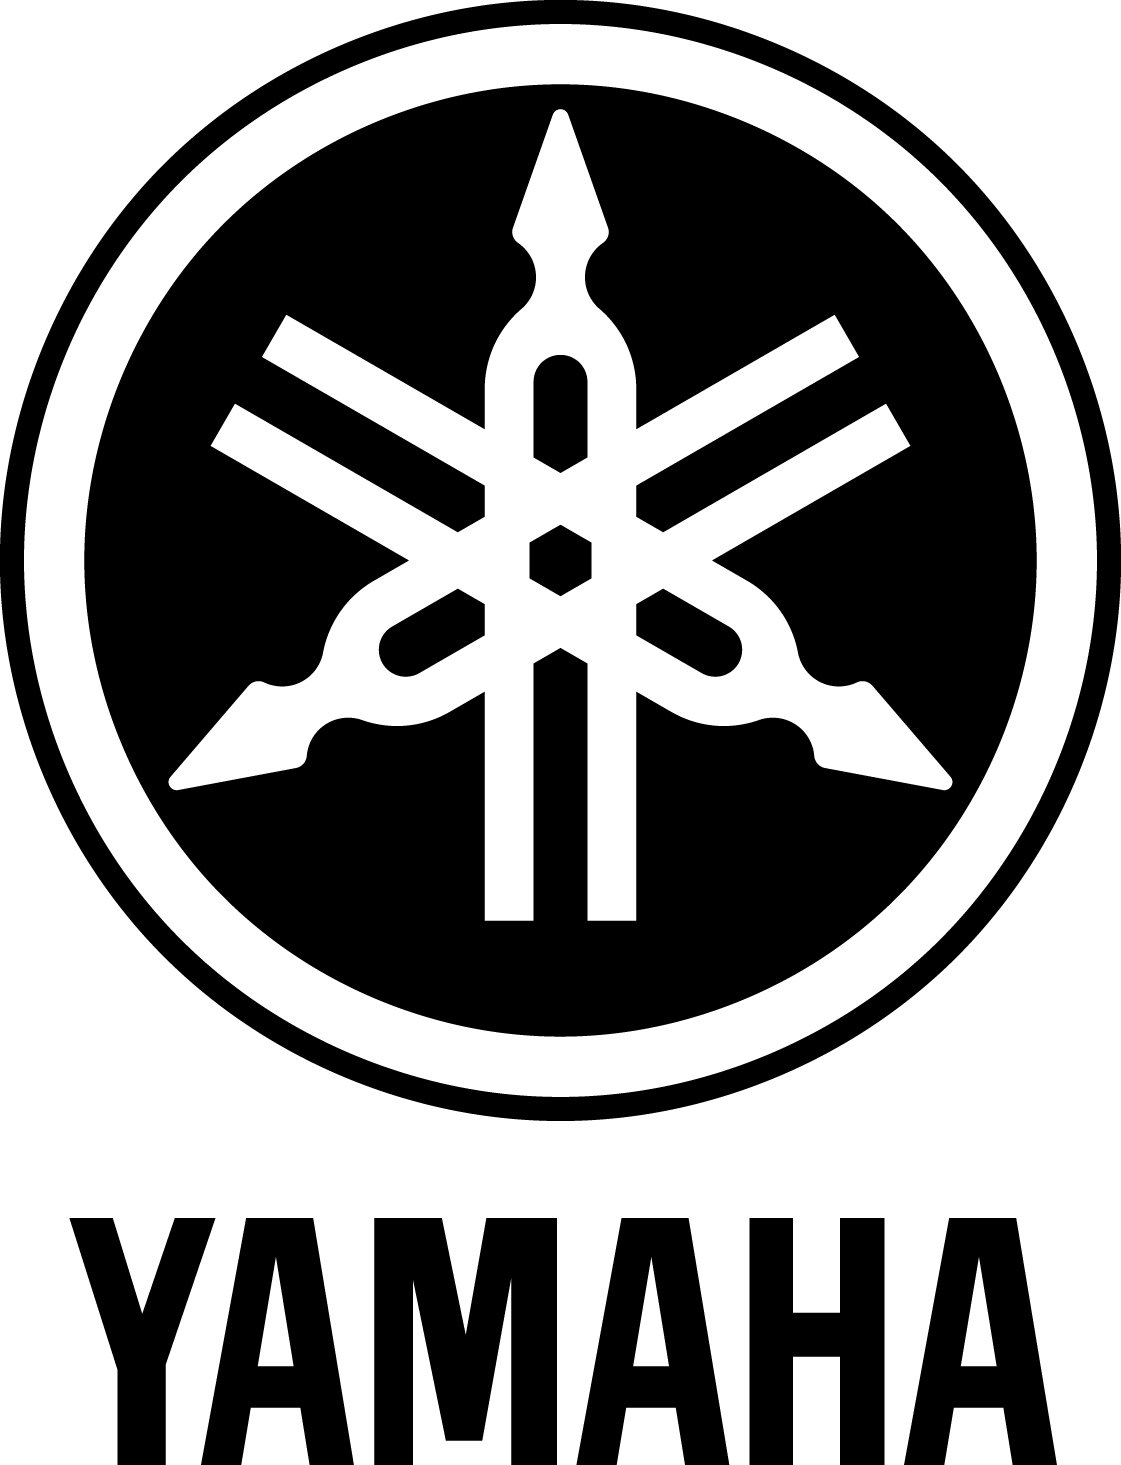 Yamaha logo Design In Illustrator Tutorial | How To Make Yamaha logo in  Illustrator Tutorial - YouTube